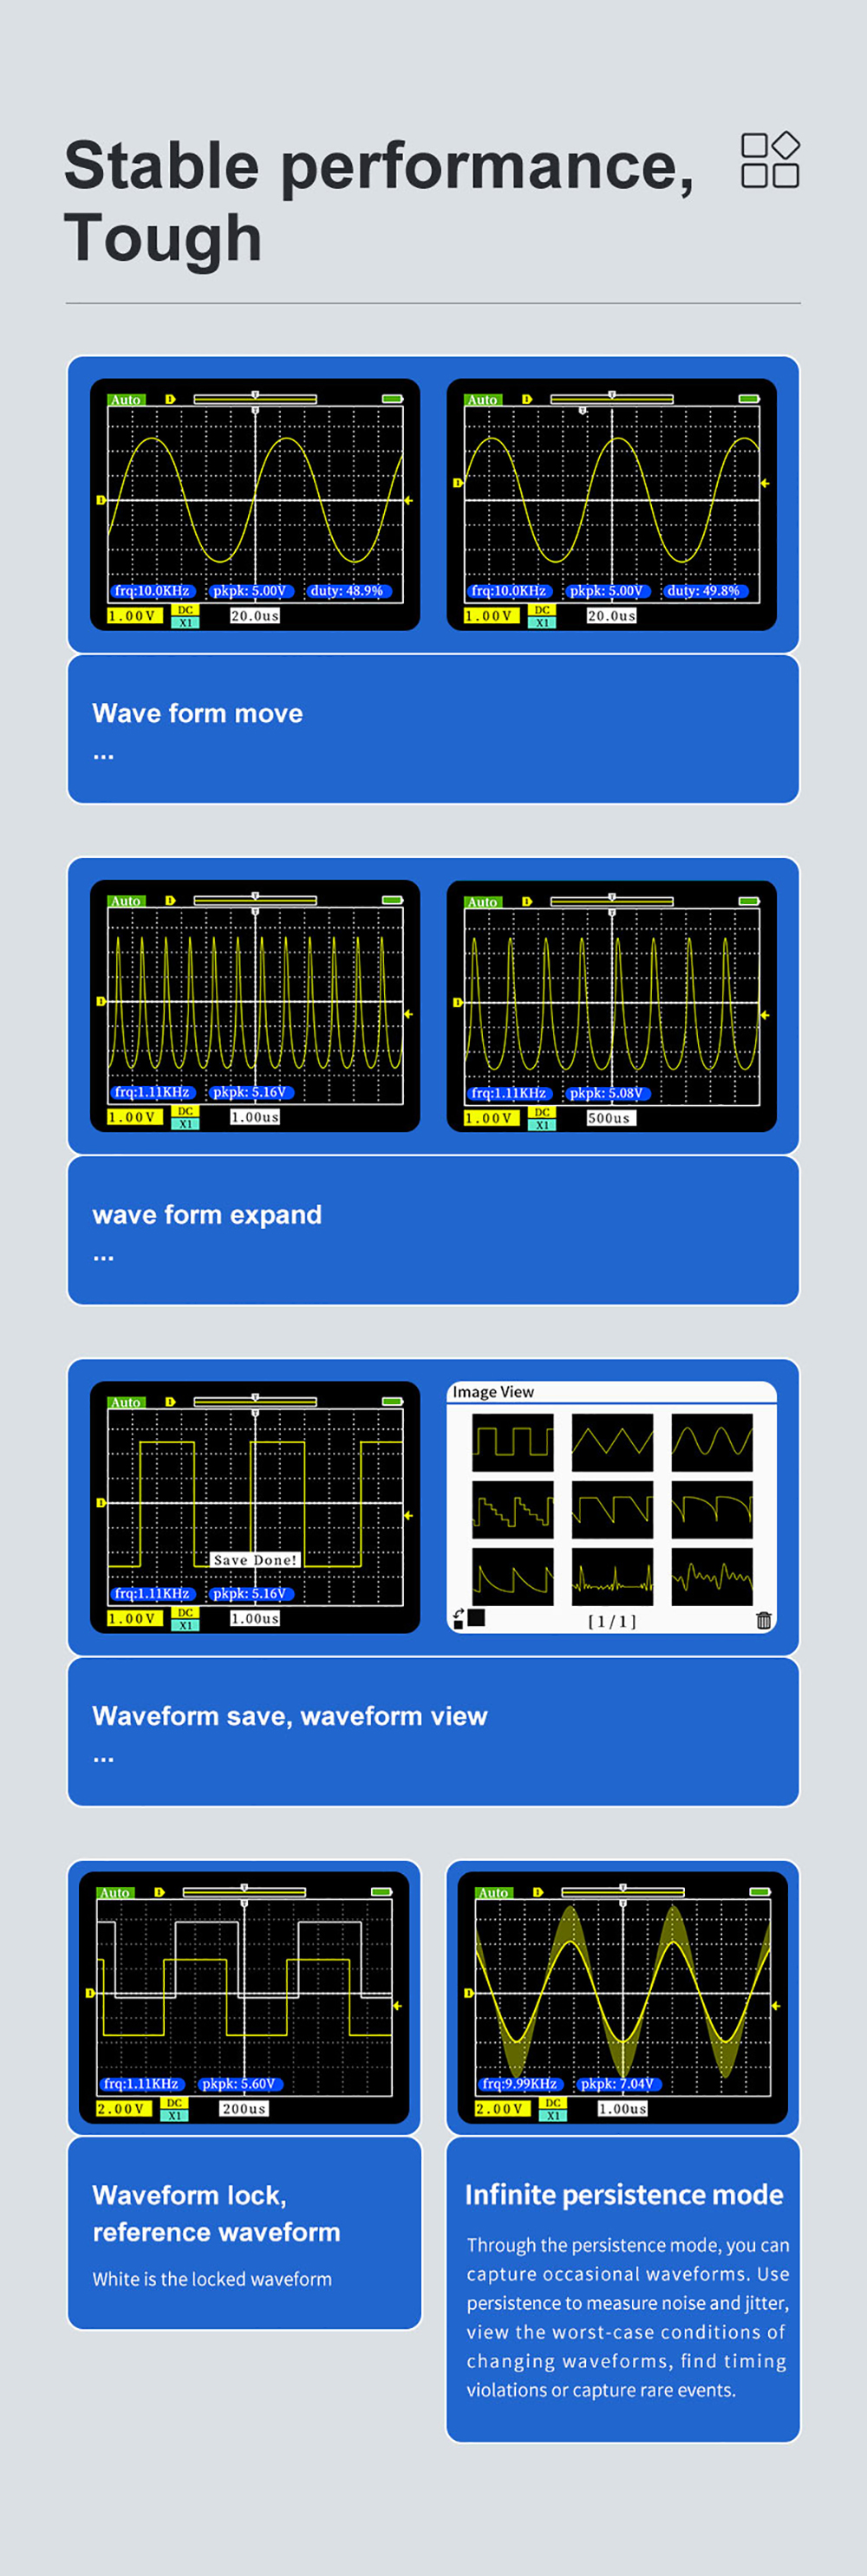 FNIRSI-1C15-Professional-Digital-Oscilloscope-500MSs-Sampling-Rate-110MHz-Analog-Bandwidth-Support-W-1955096-7